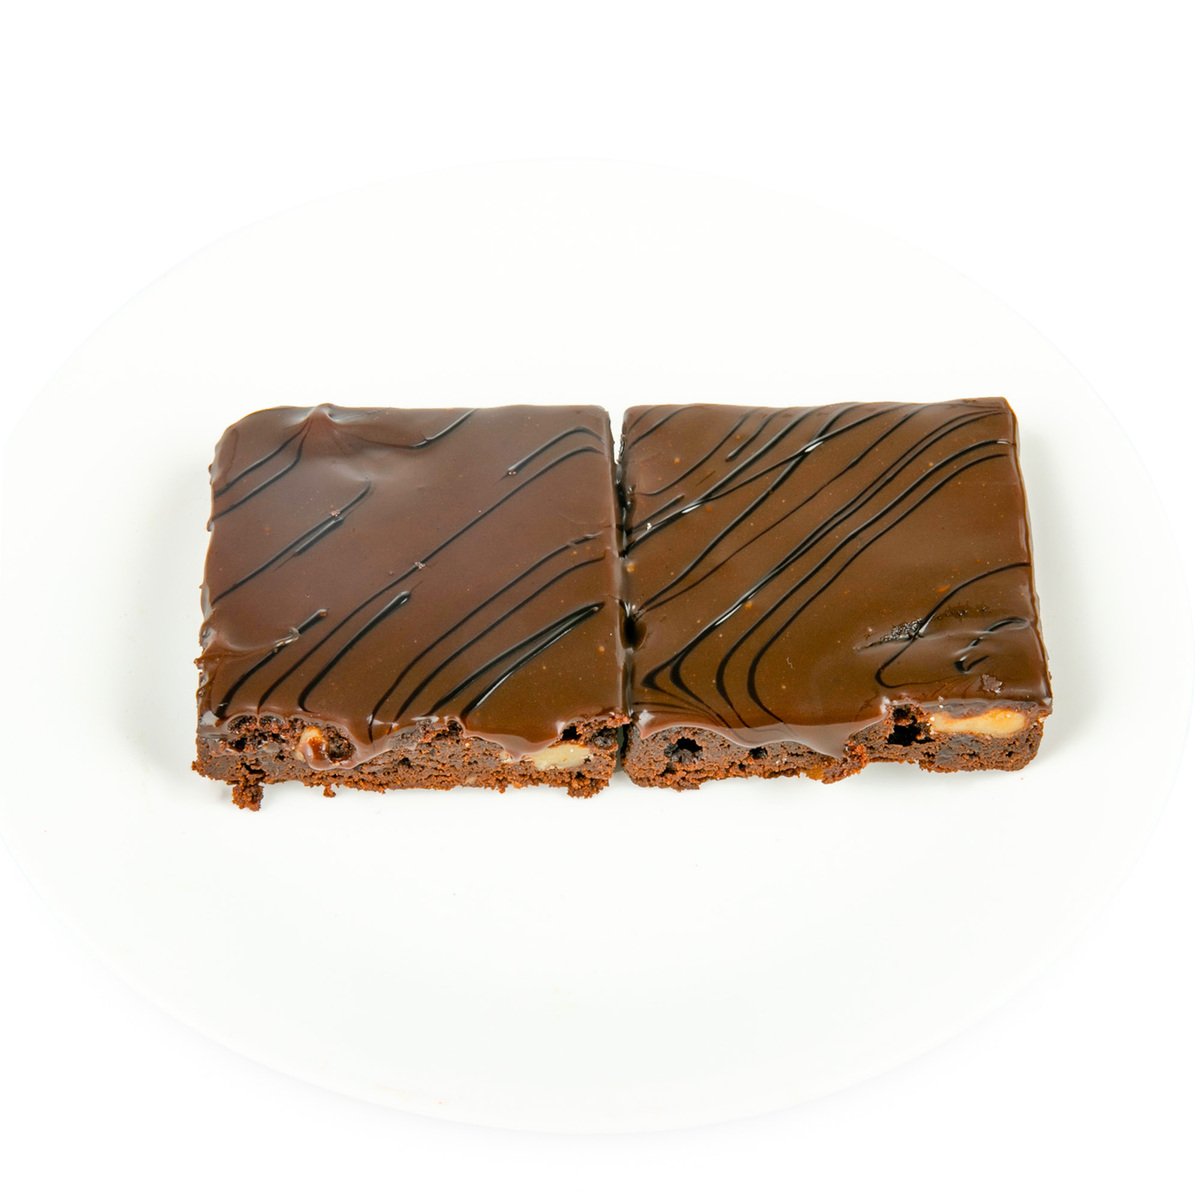 Premium Chocolate Brownie 2 pcs